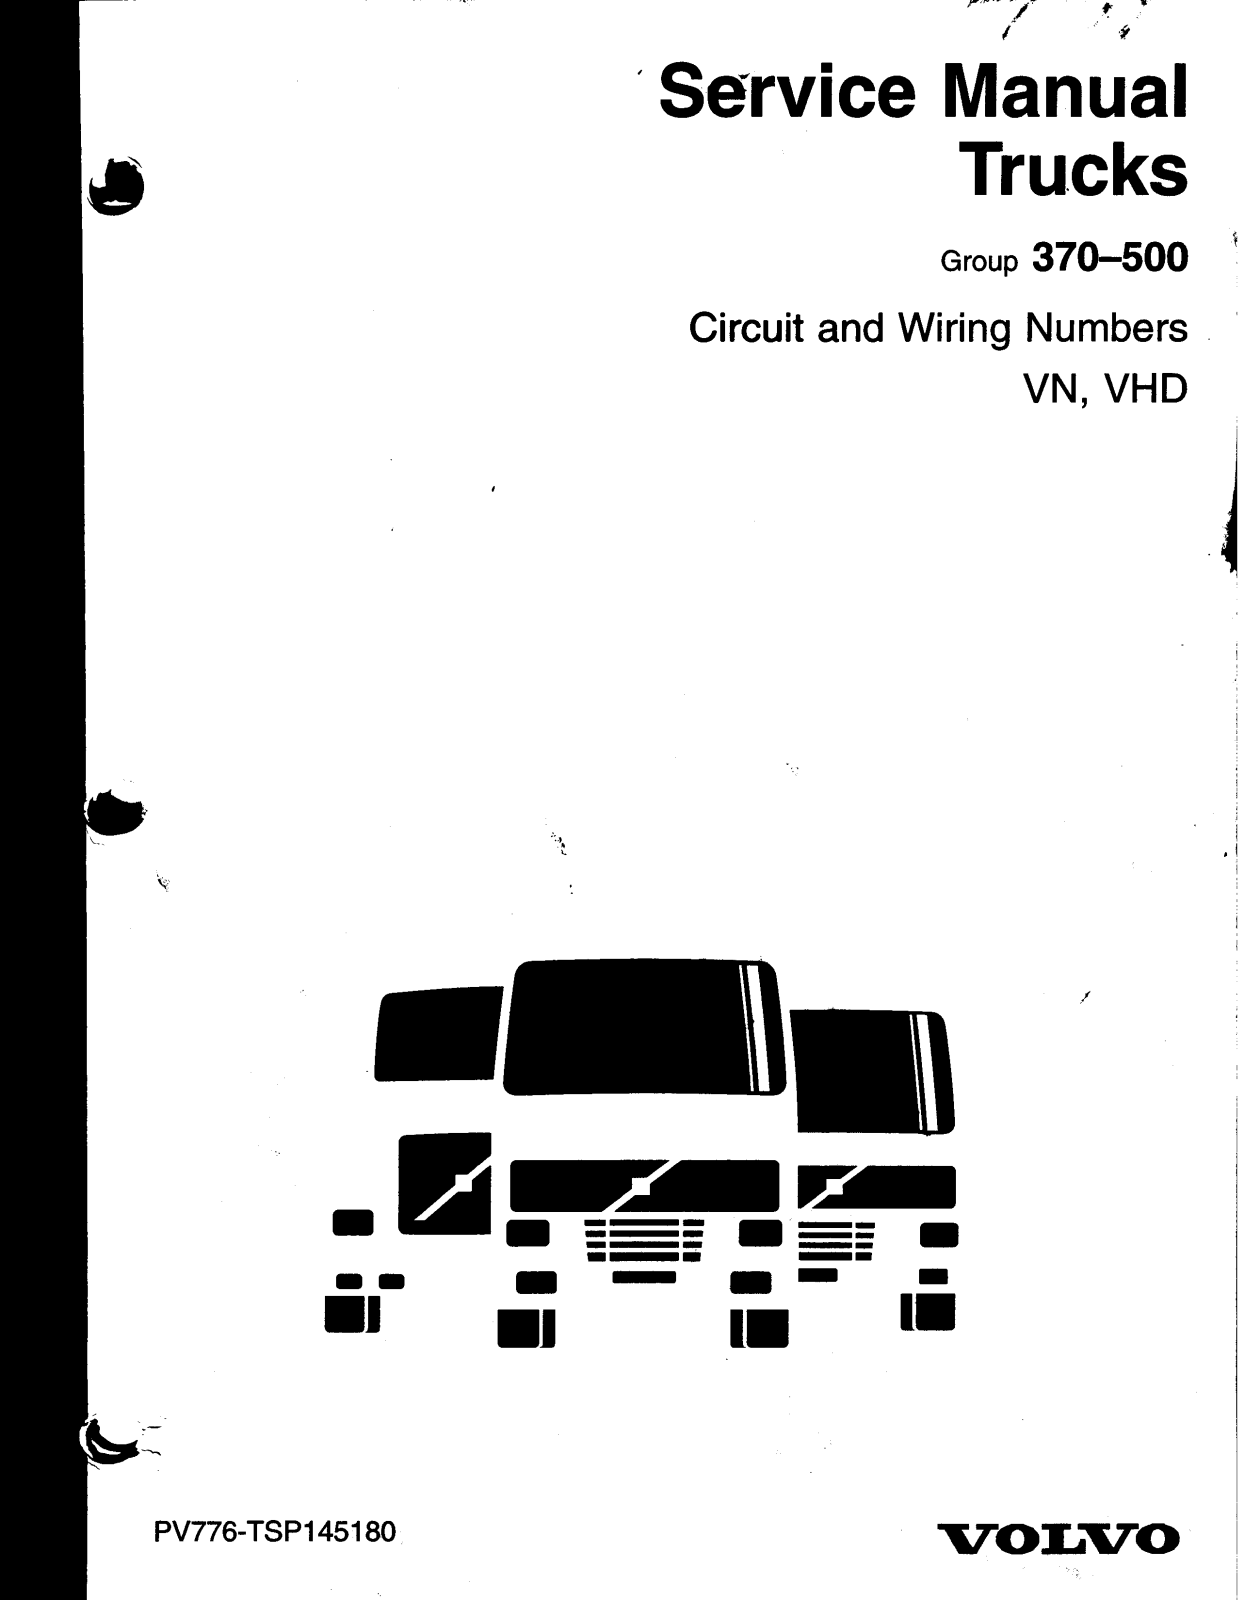 Volvo VN, VHD Service Manual